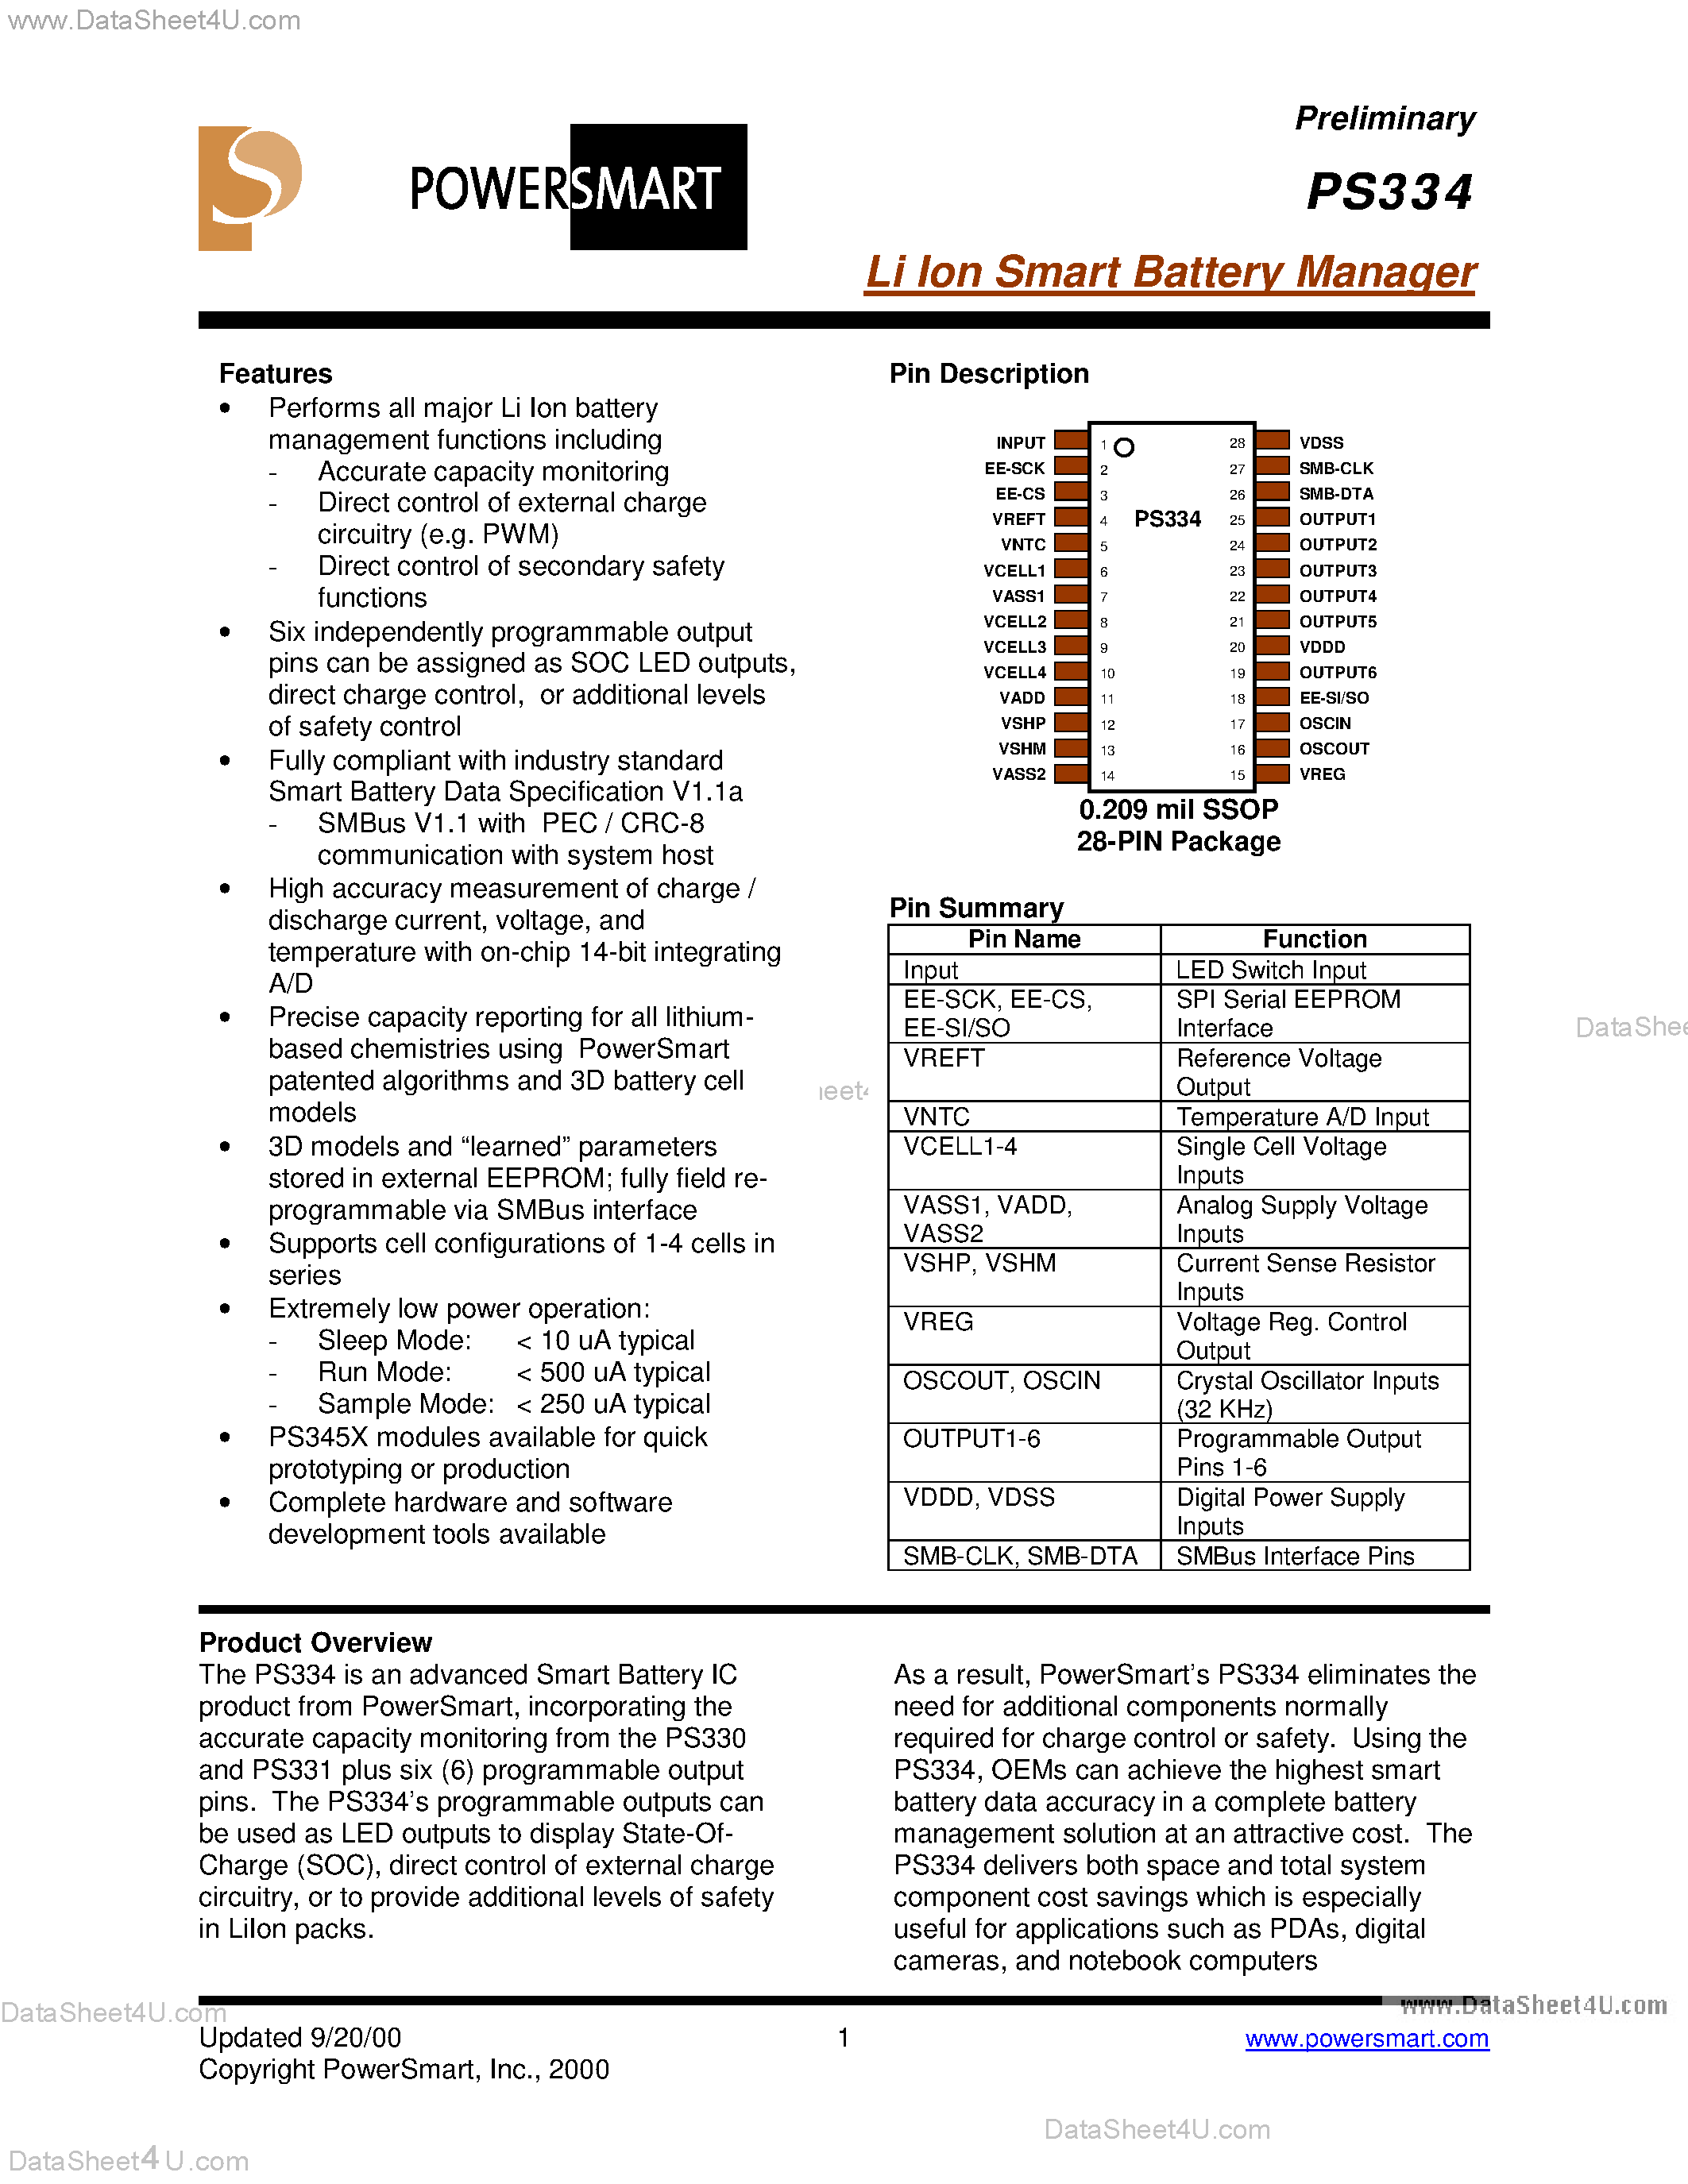 Даташит PS334-Programmable Smbus Smart Battery ic страница 1